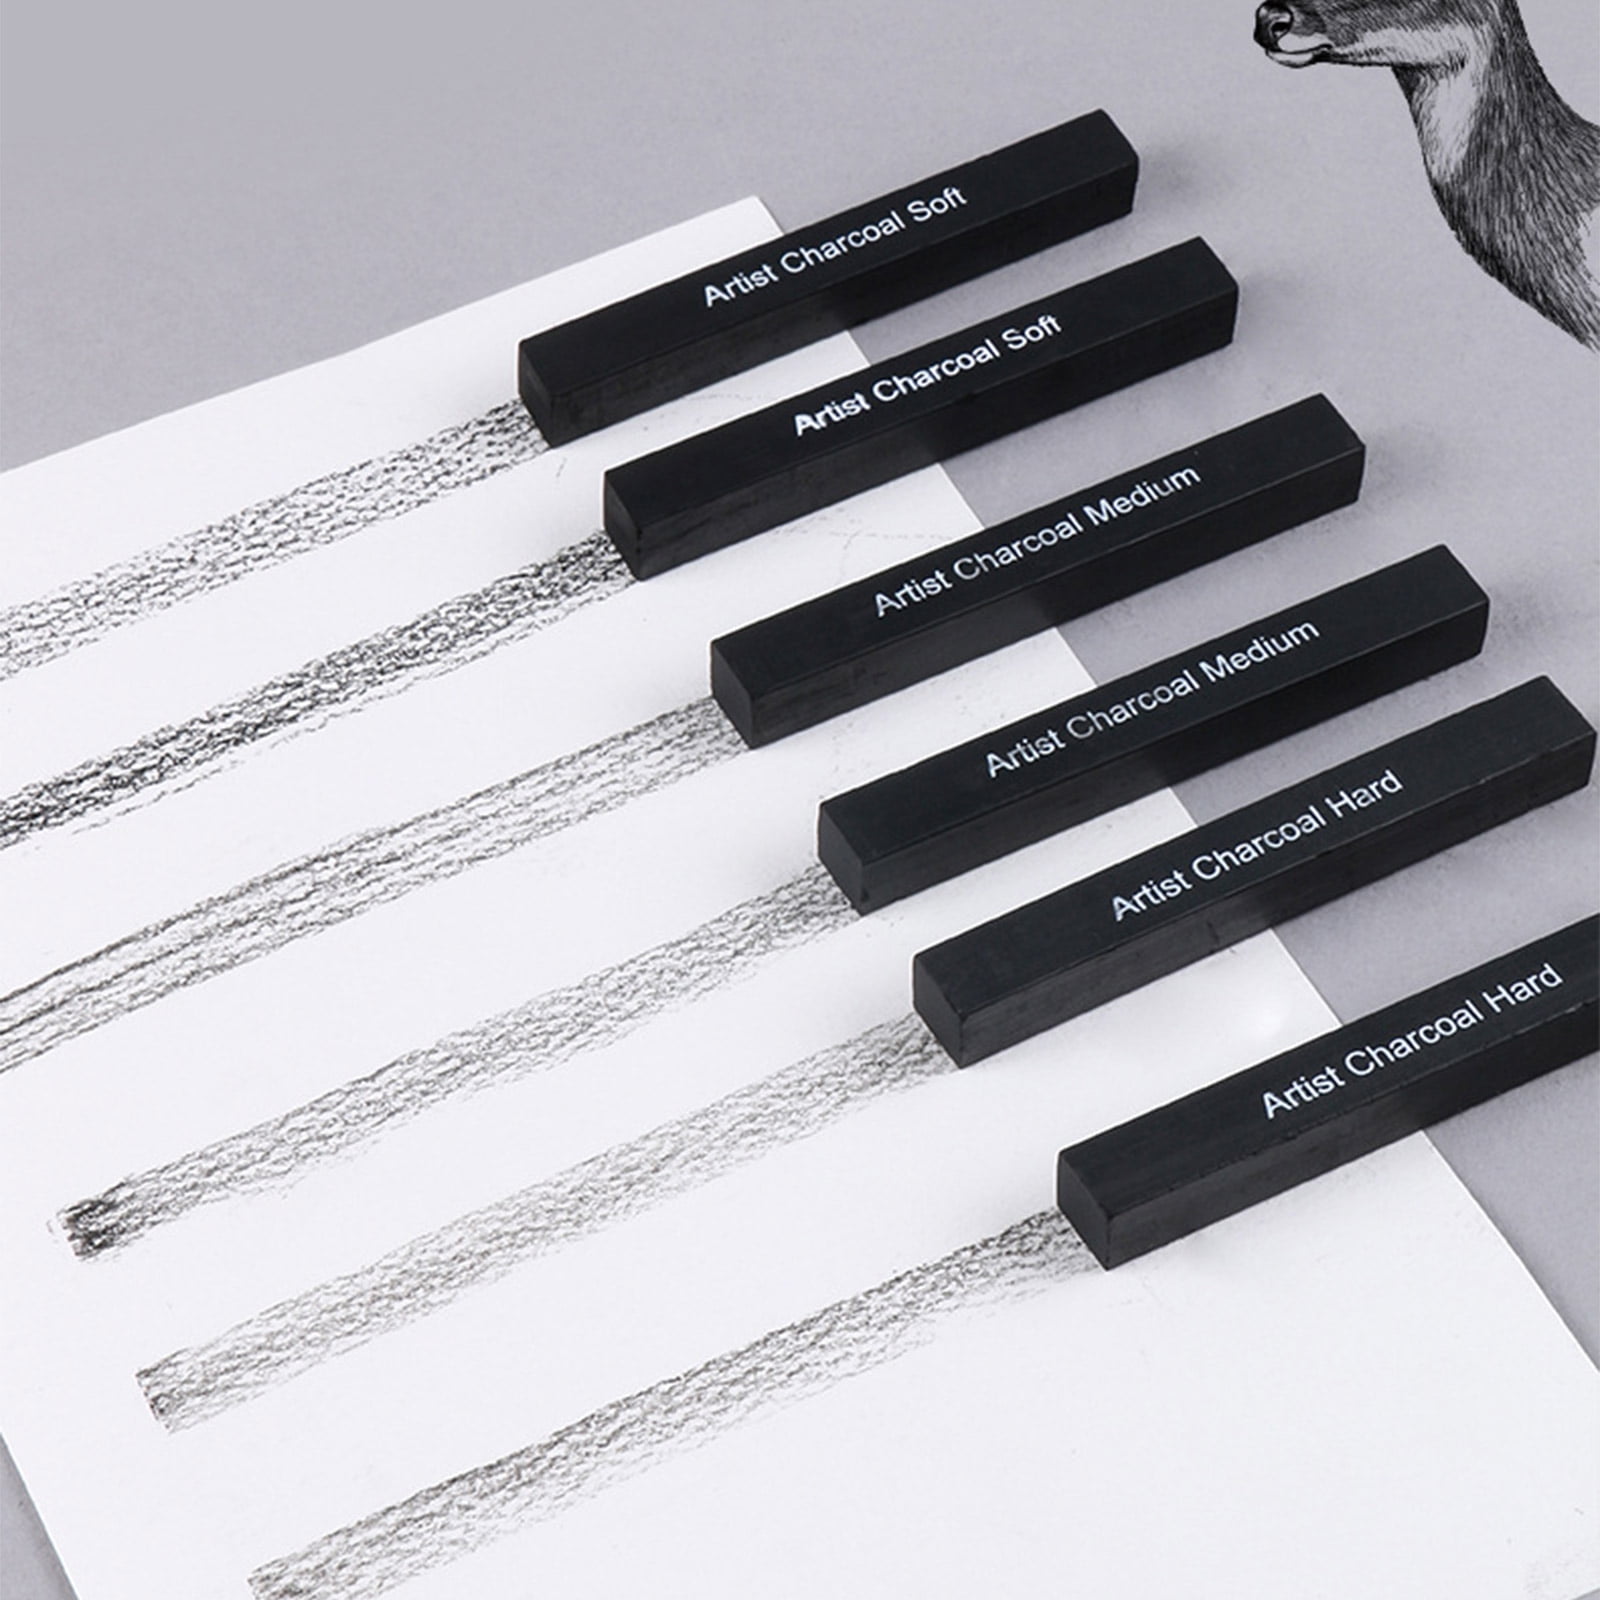 Art Supplies - Pencils, Leads & Charcoal - Charcoal - Faber-Castell  Charcoal - Sticks - Sam Flax Atlanta